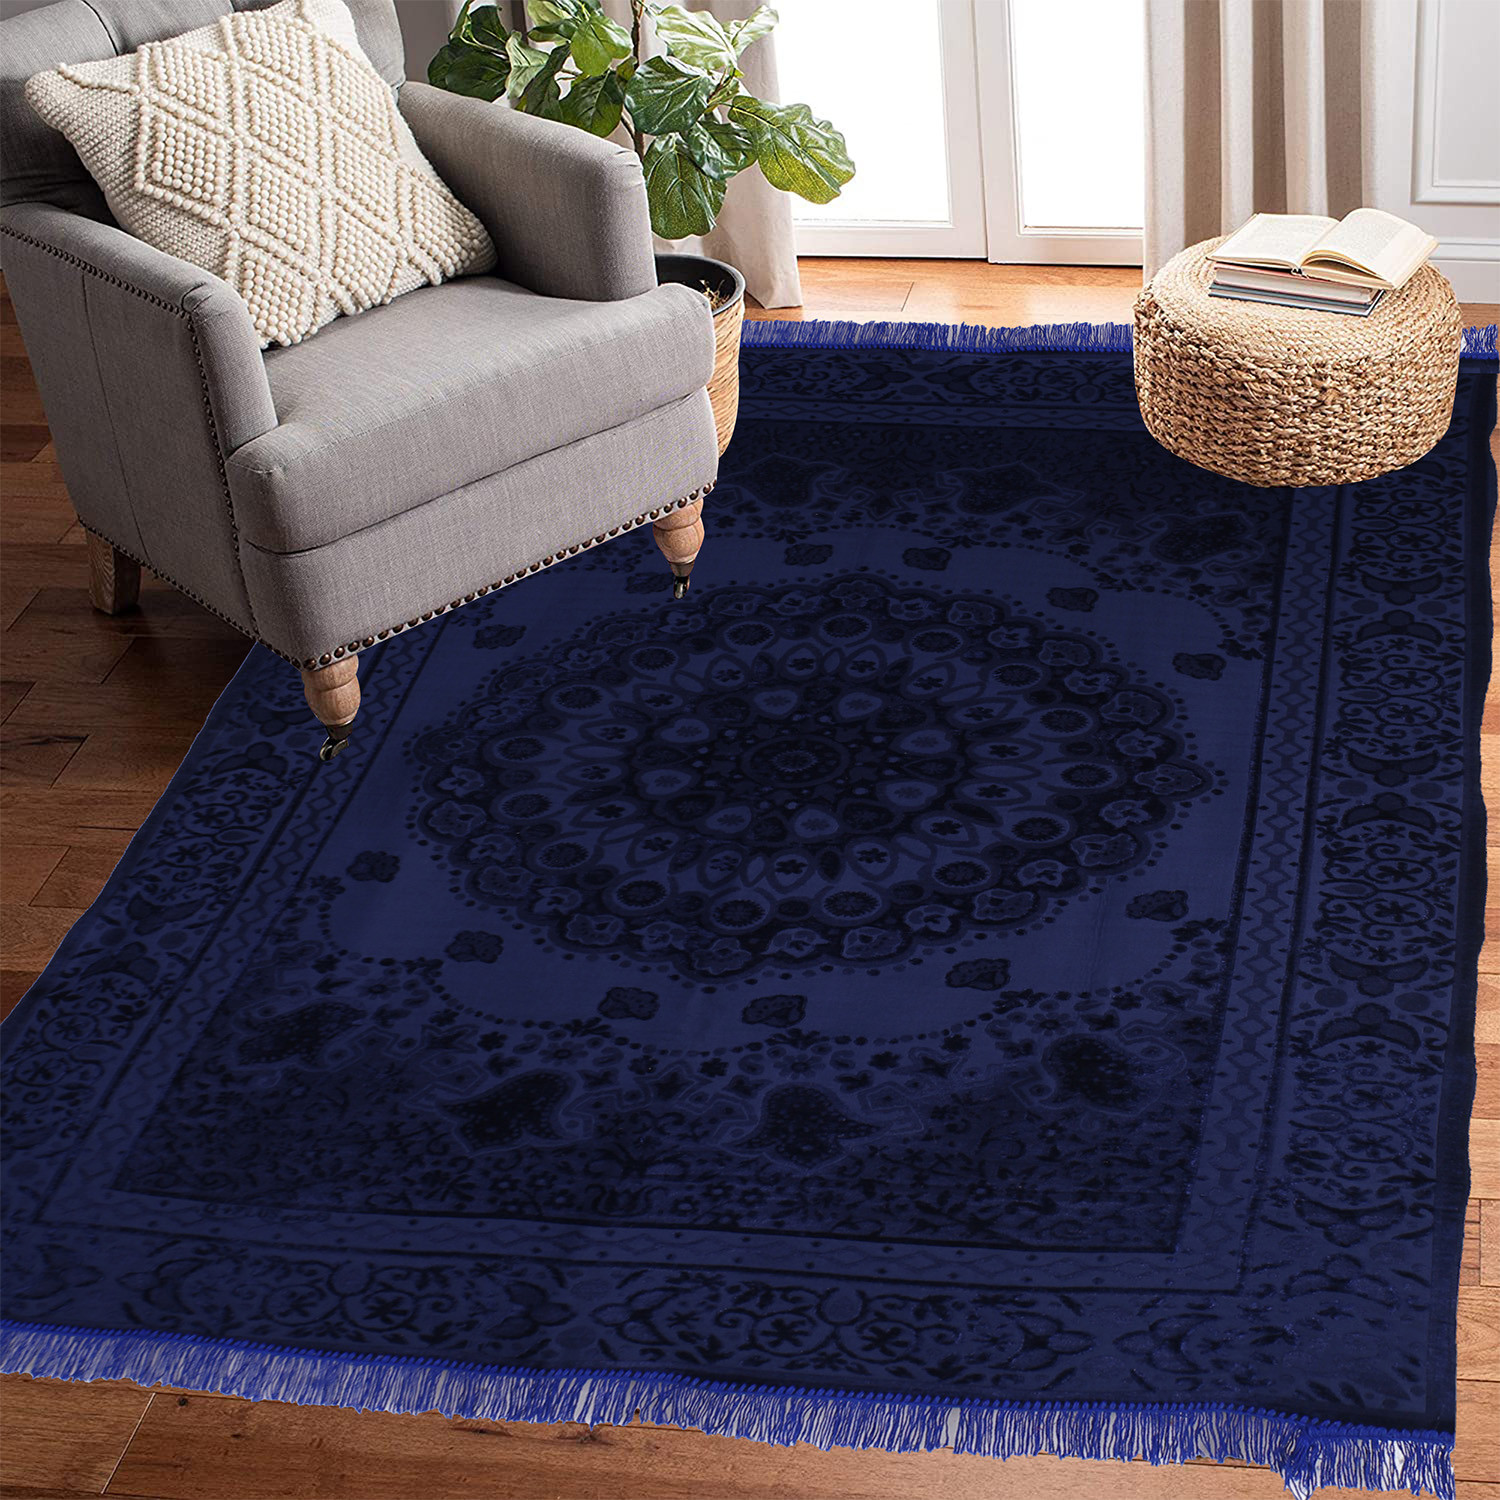 Kuber Industries Carpet|Water Absorption Embossed Floral Pattern Floor Mat|Velvet Sitting Carpet for Hall, Living Room, 5x7 Feet (Dark Blue)